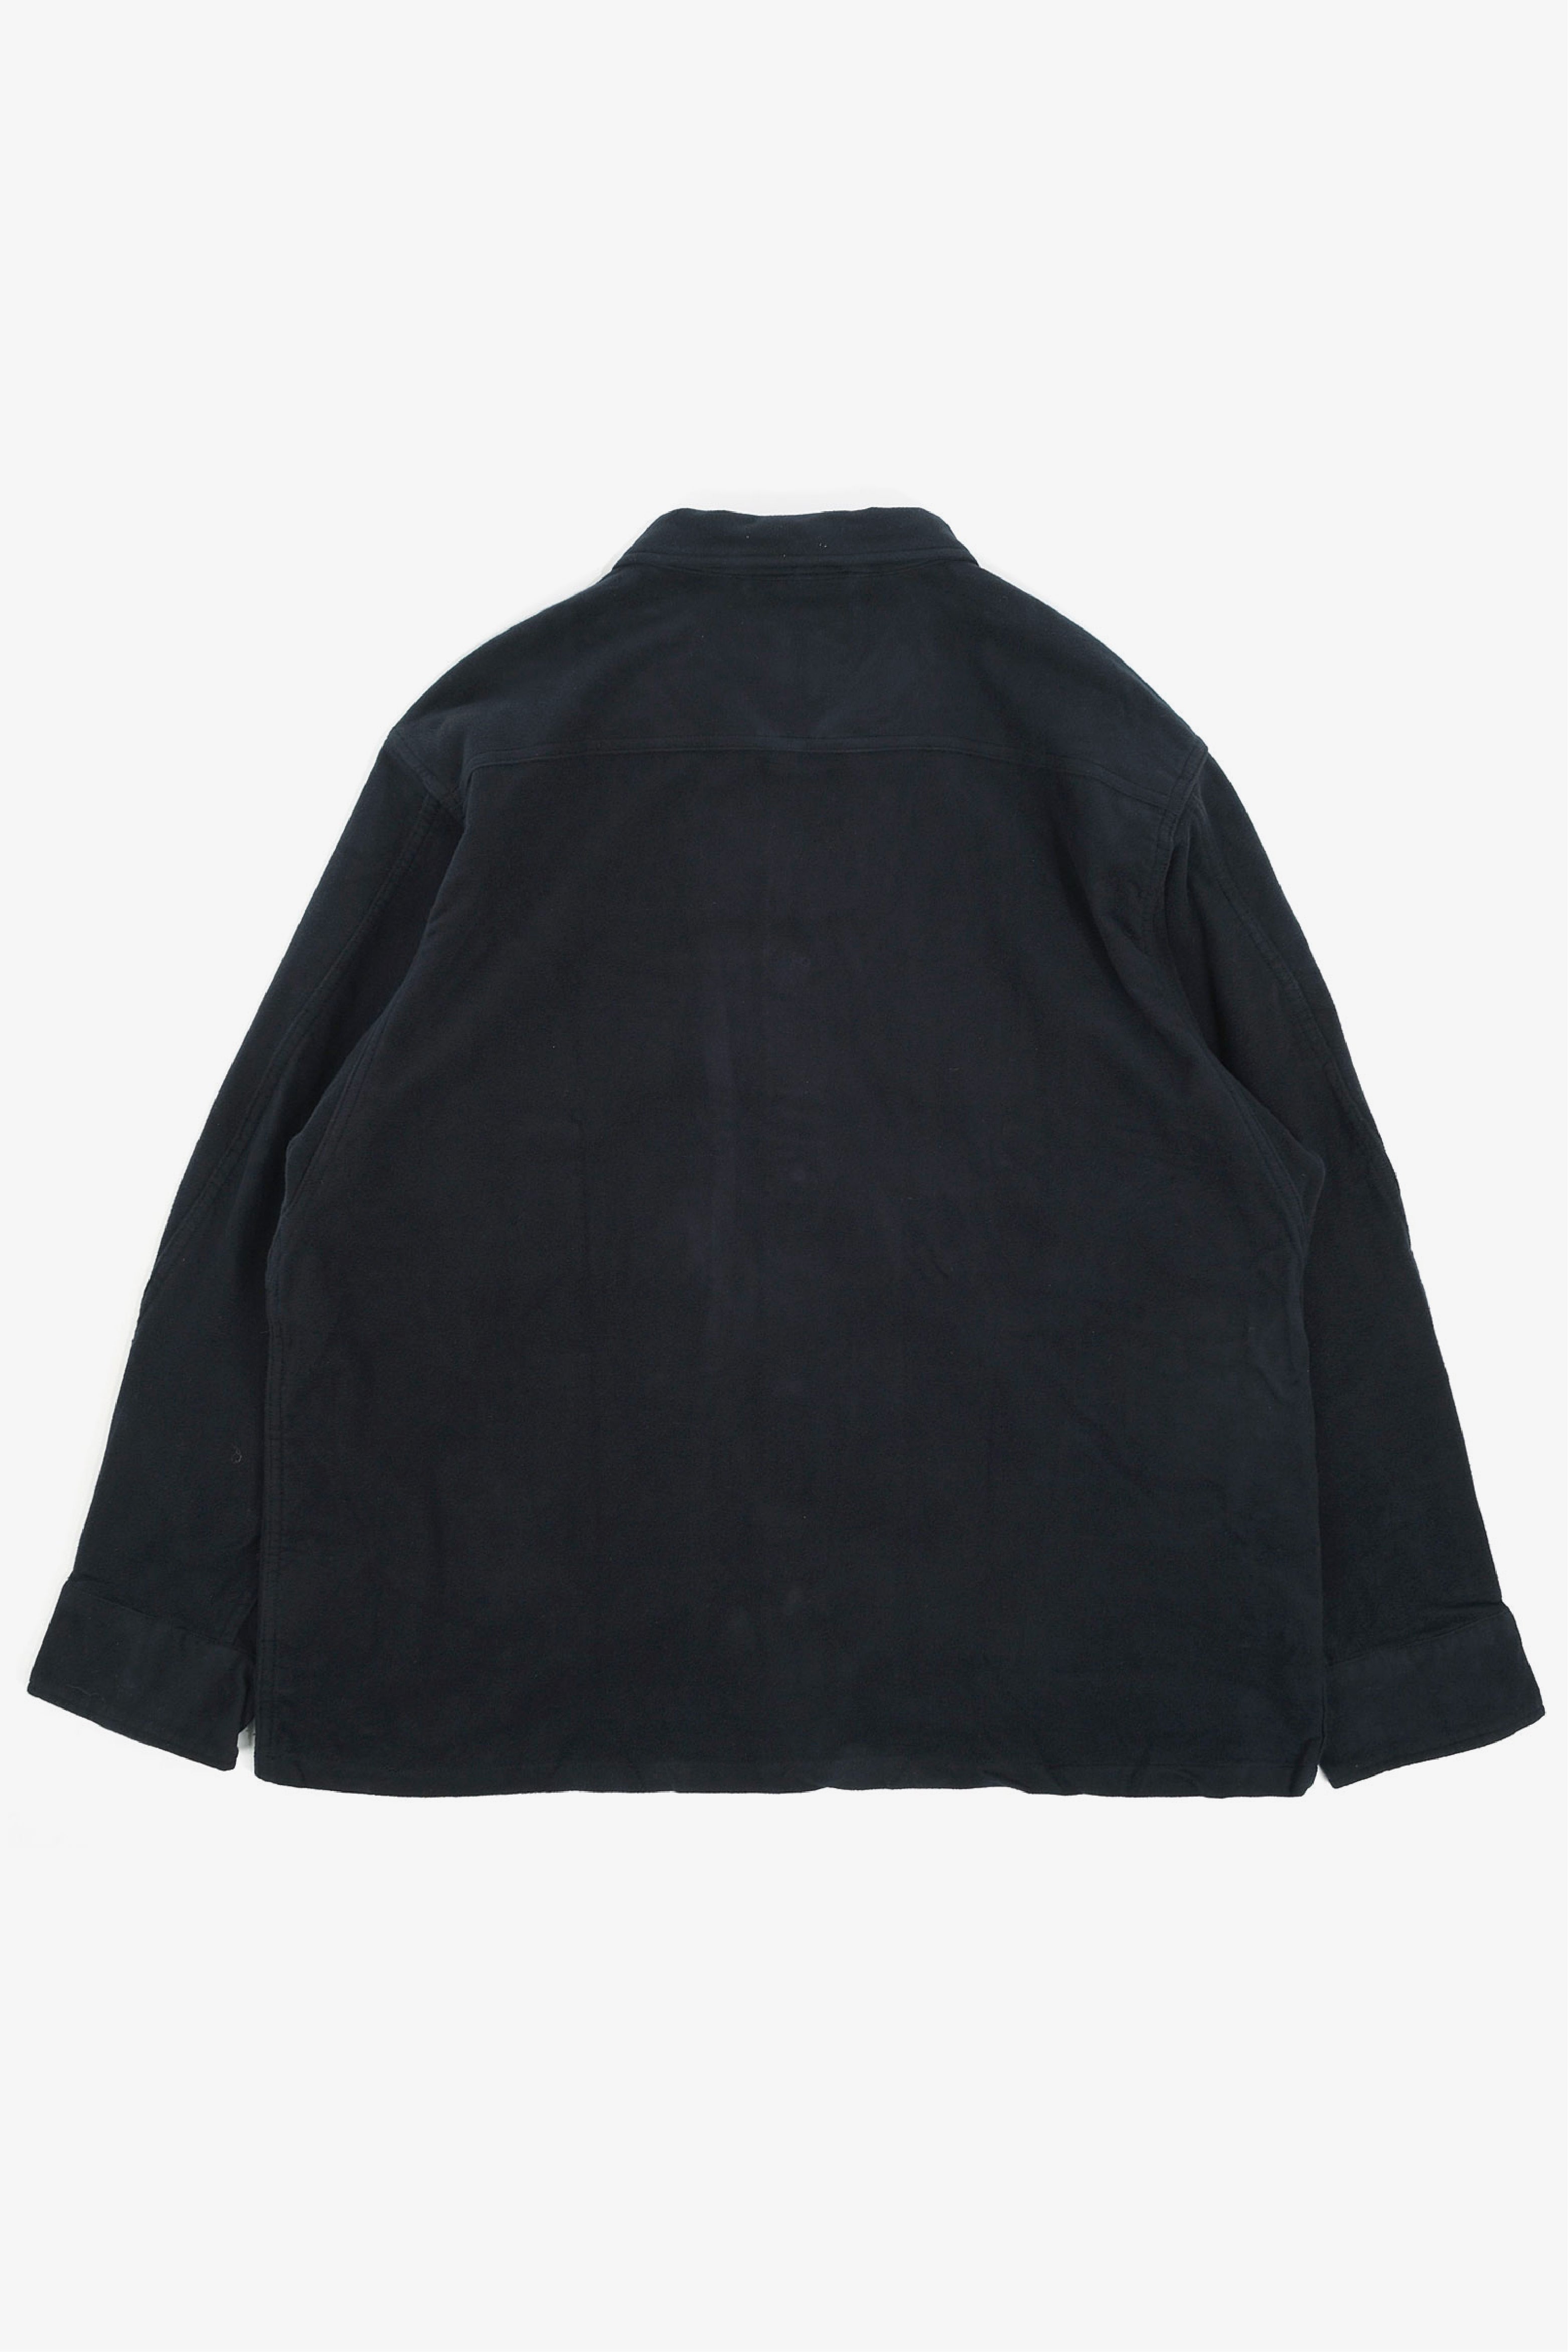 Selectshop FRAME - NANAMICA CPO Jacket Outerwear Dubai